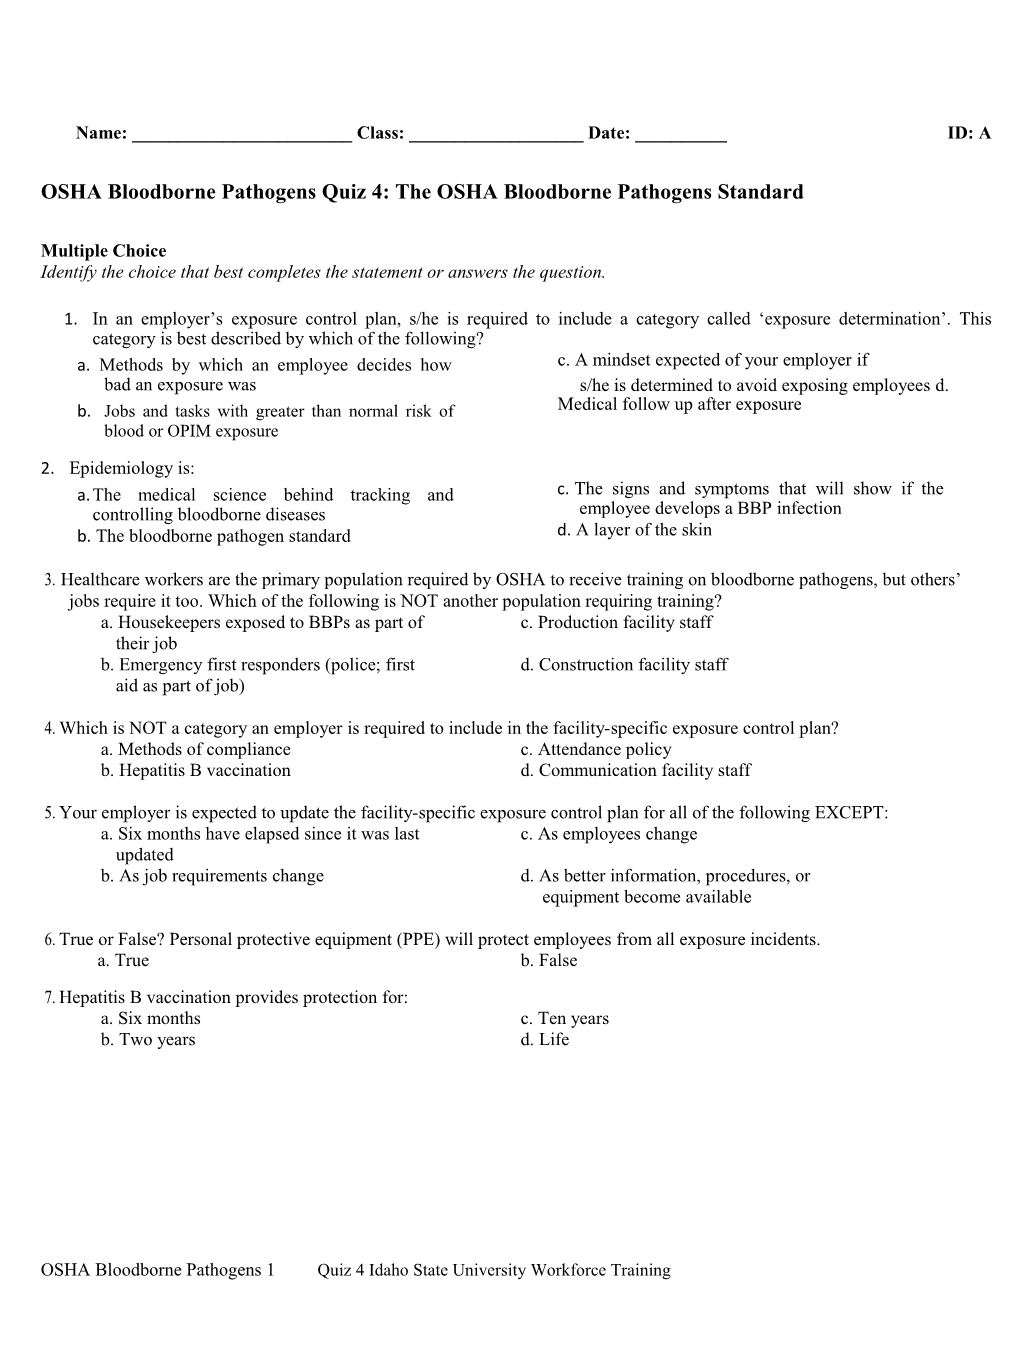 OSHA Bloodborne Pathogens Quiz 4: the OSHA Bloodborne Pathogens Standard